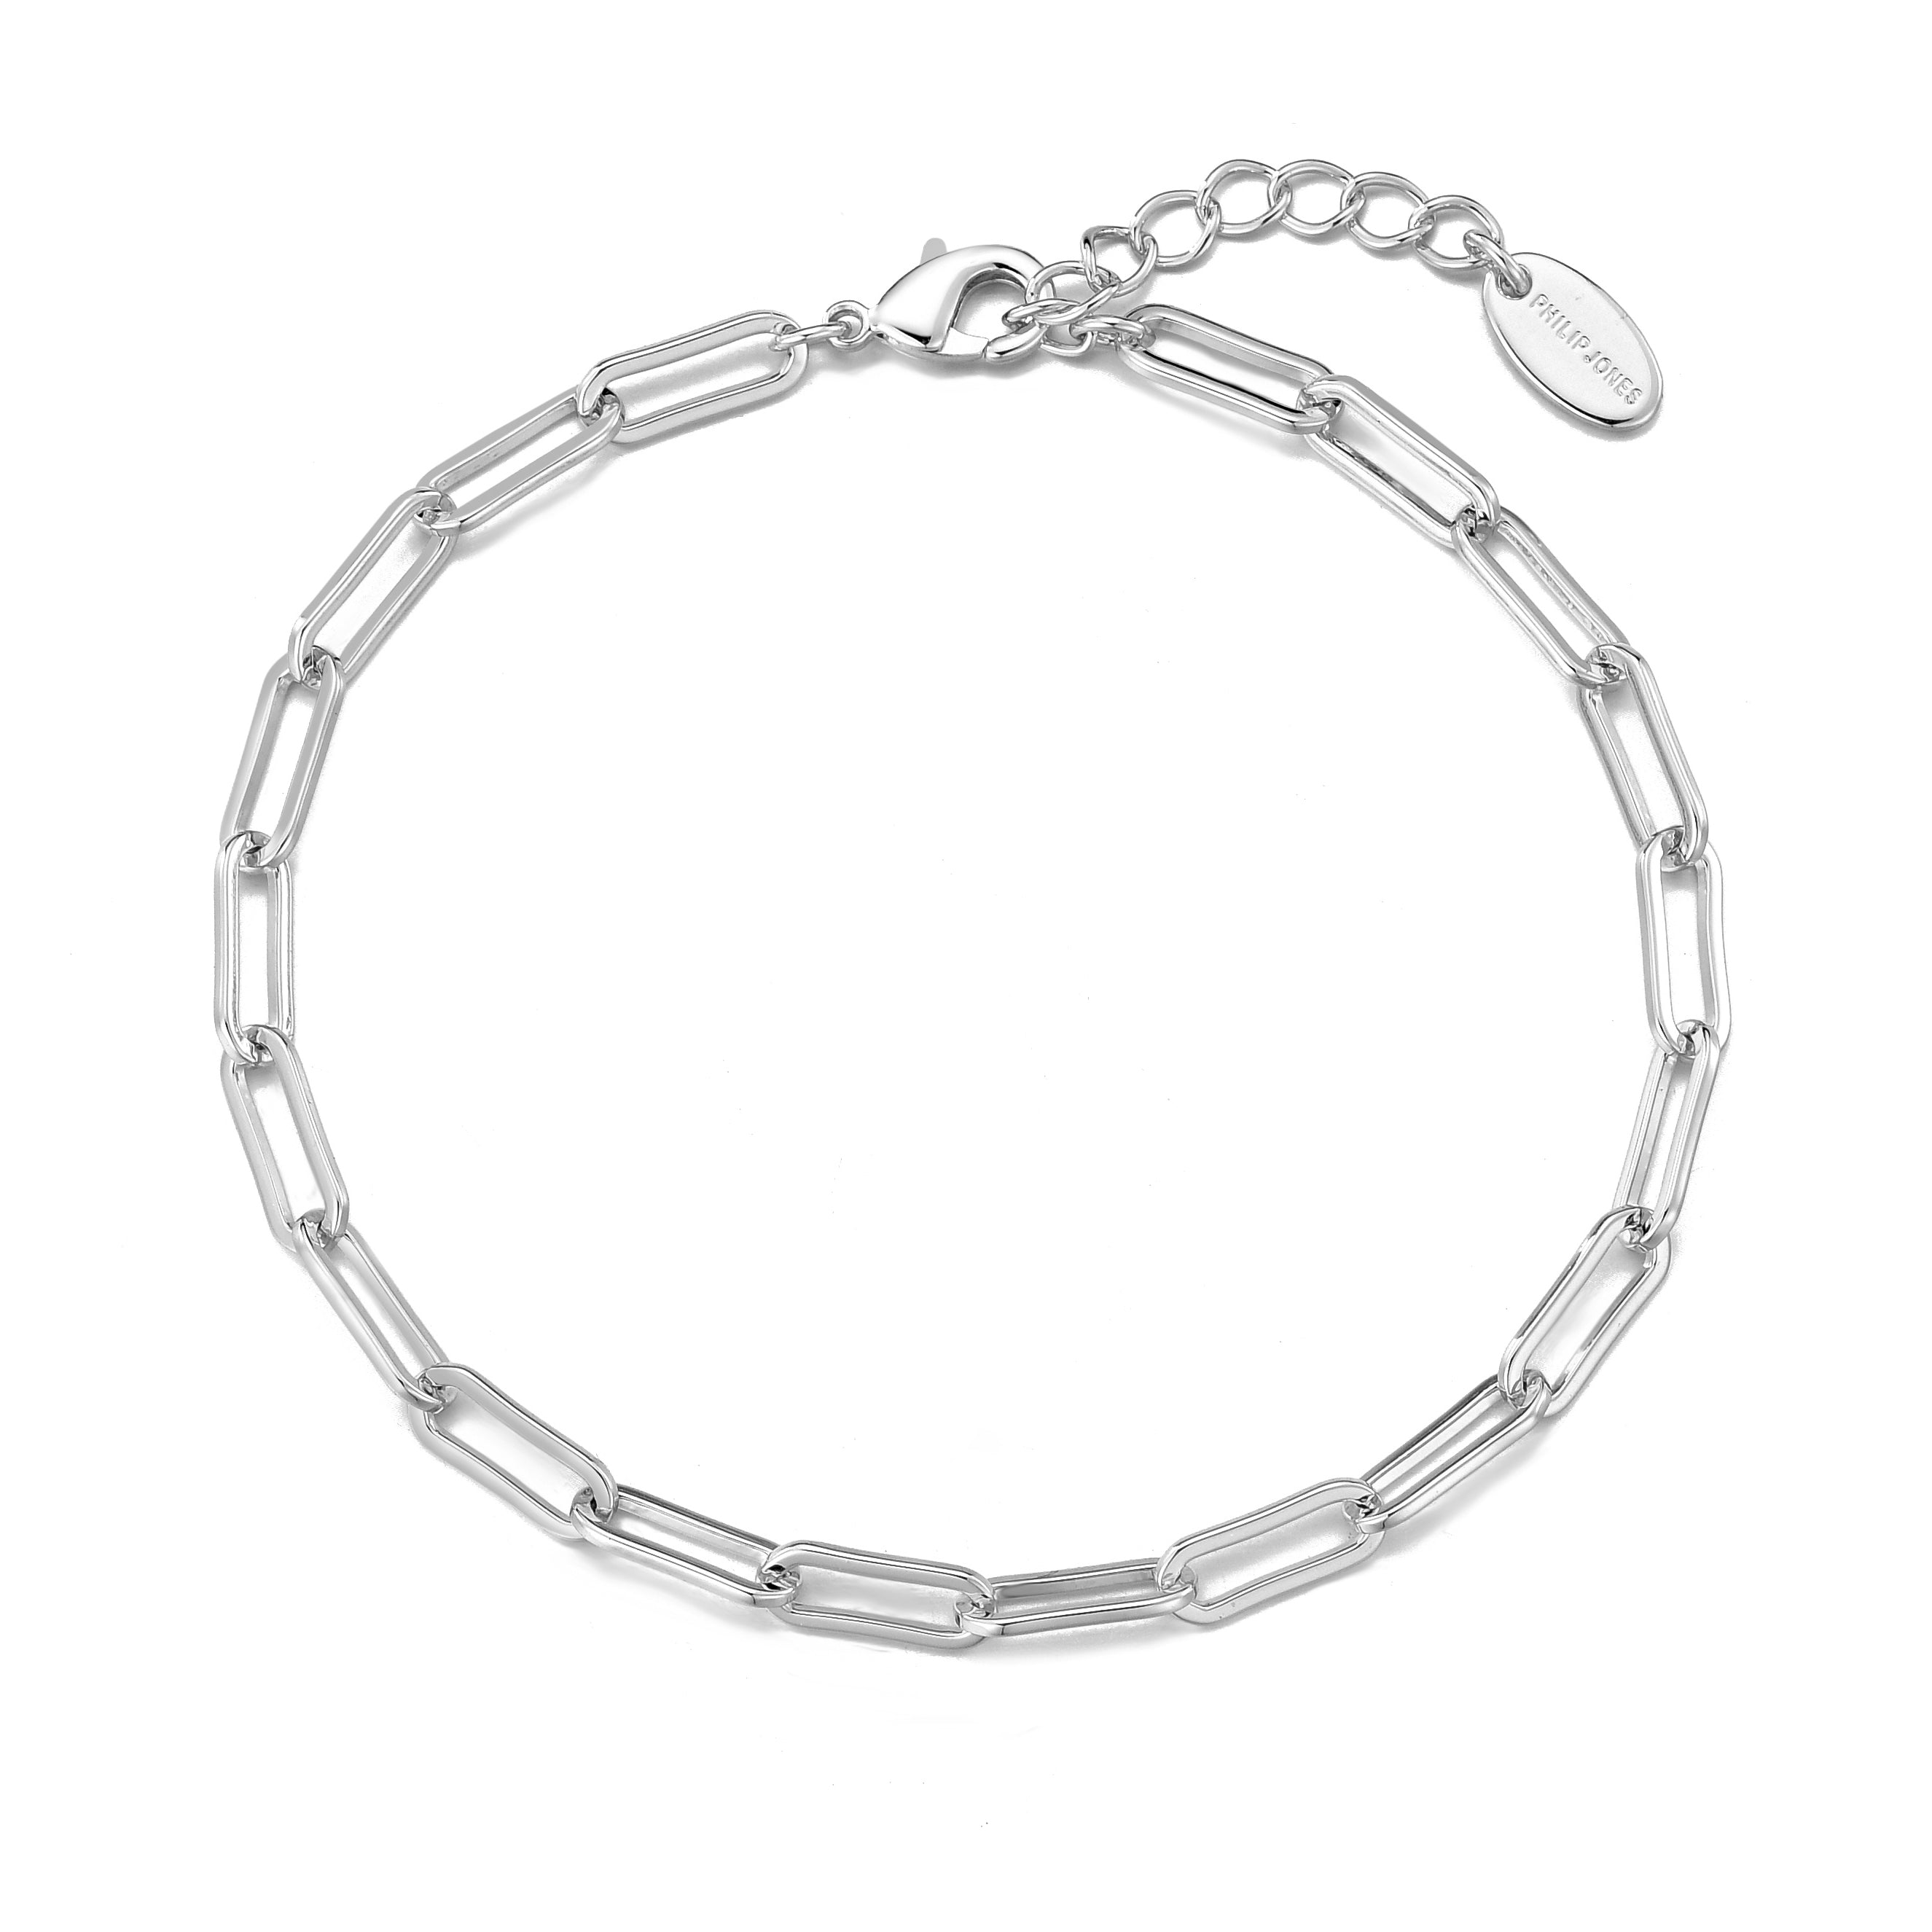 Silver Plated Paperclip Bracelet by Philip Jones Jewellery